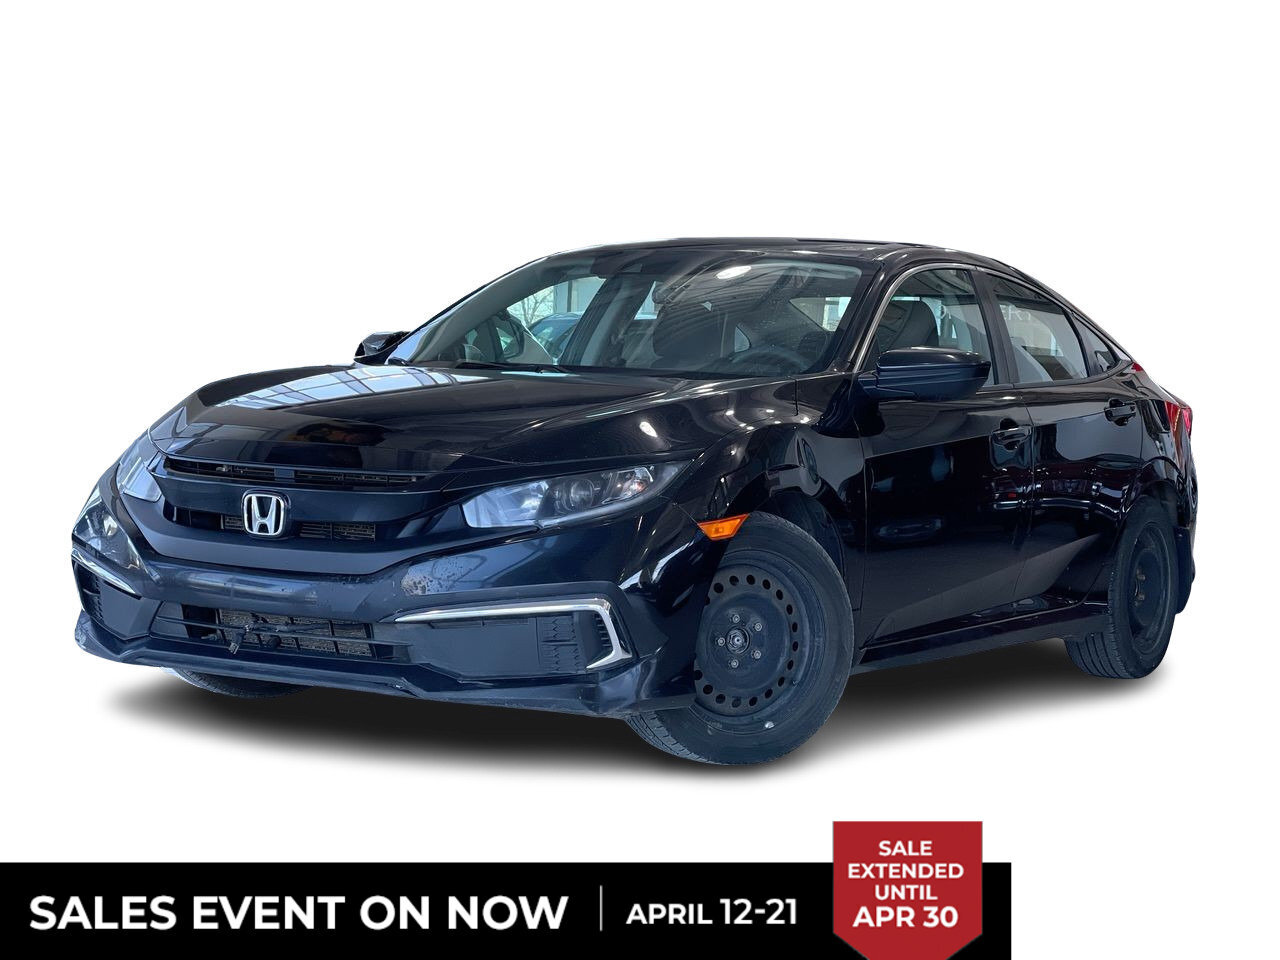 2020 Honda Civic Sedan LX CVT Heated Seats/Backup Camera/Apple Carp